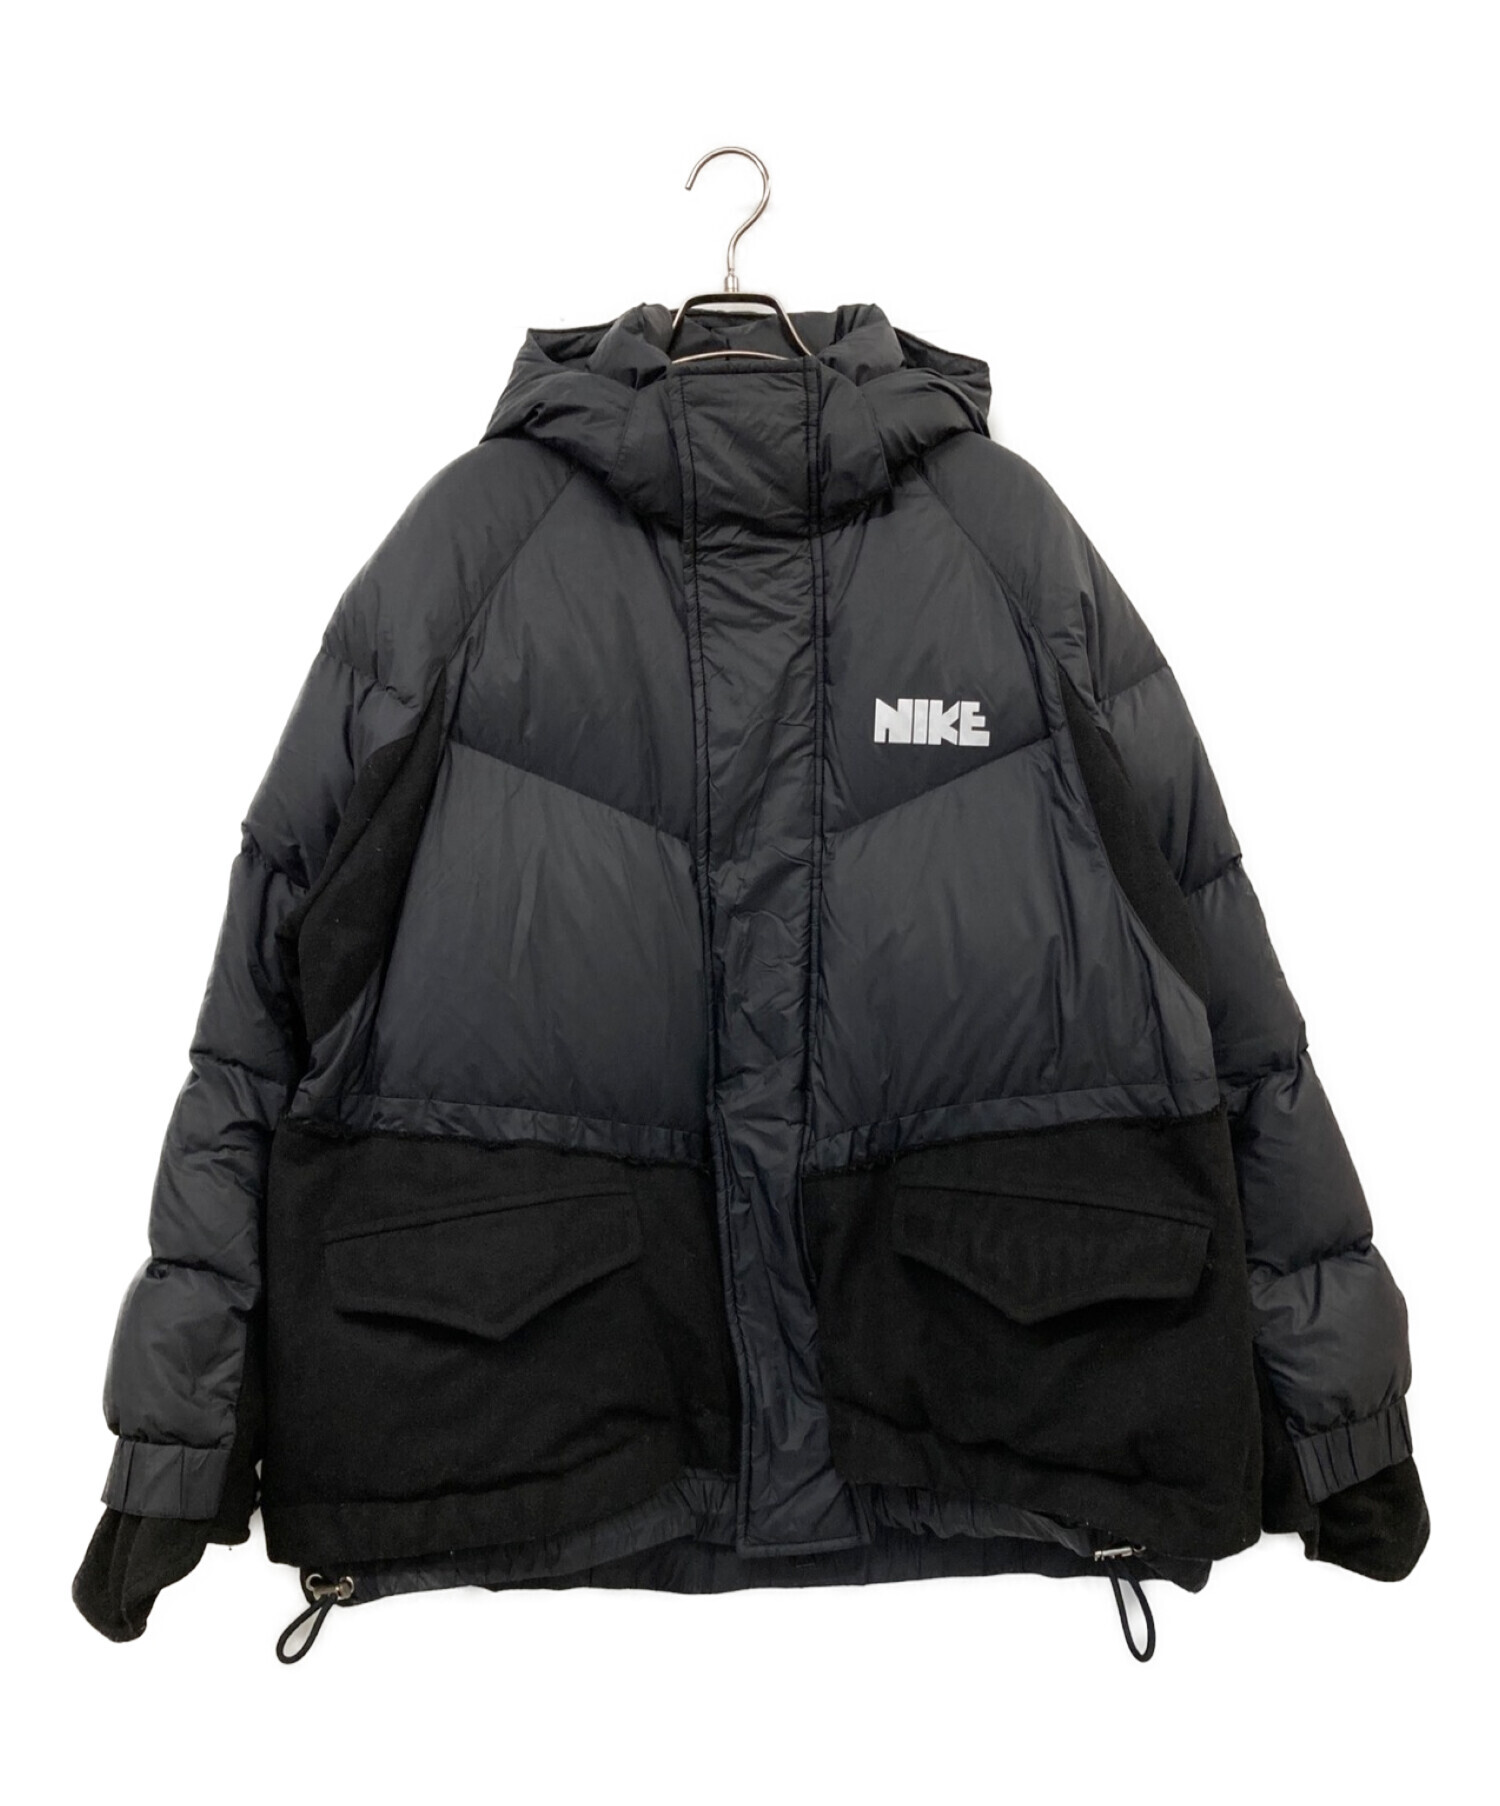 NIKE (ナイキ) sacai (サカイ) 20AW NRG RH PARKA ダウンジャケット ブラック サイズ:XL